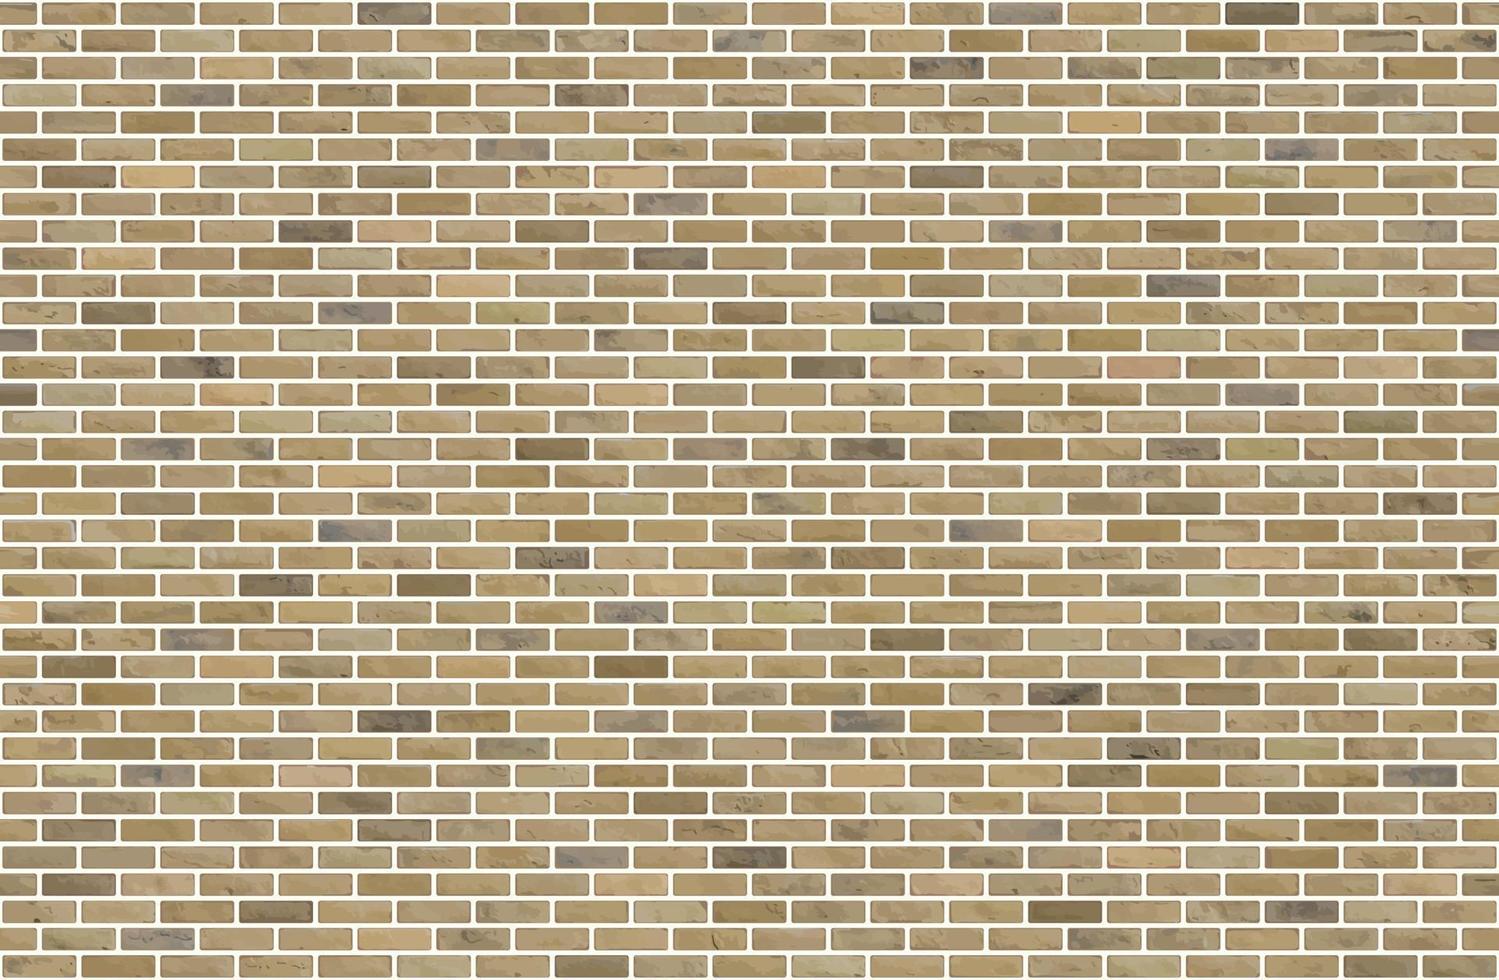 mooie blok bakstenen muur patroon textuur achtergrond vector